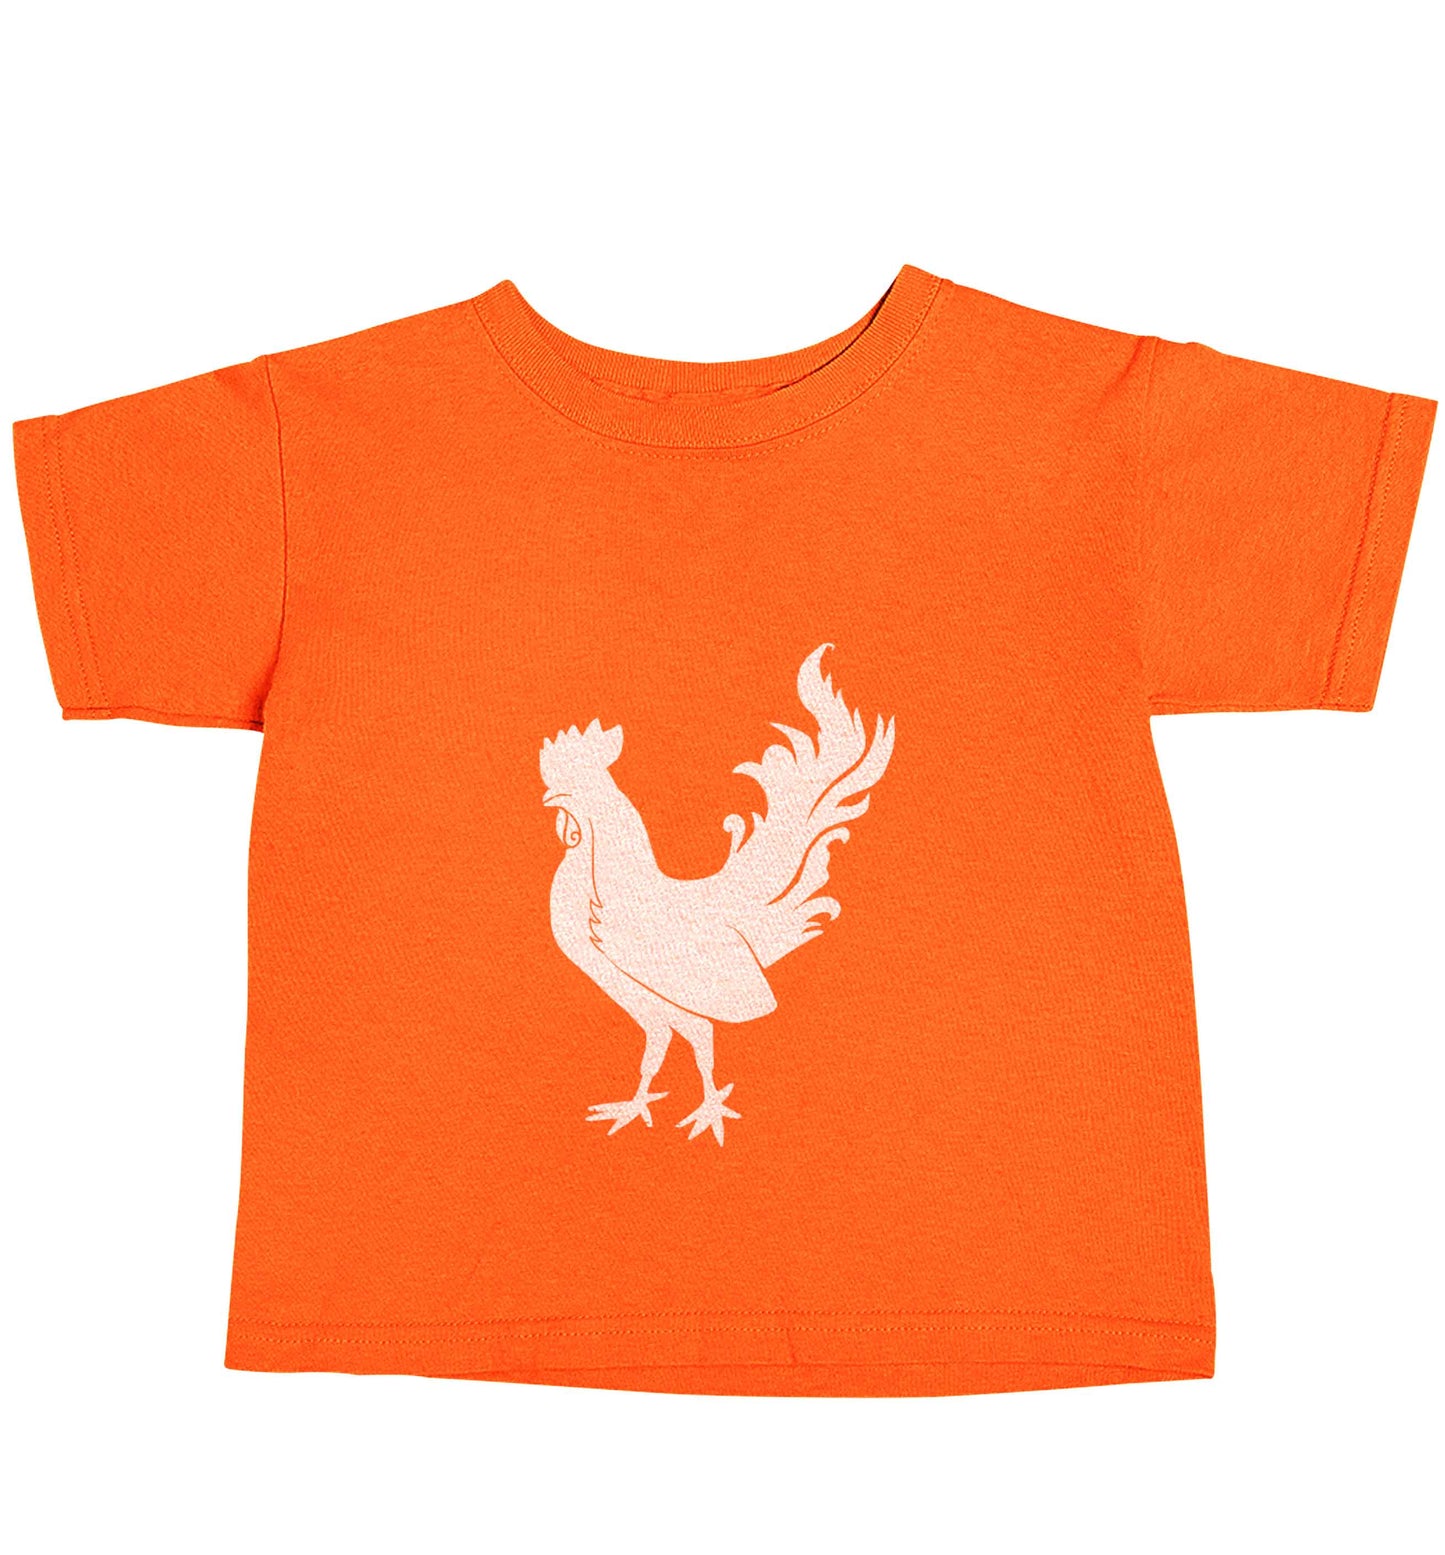 Rooster orange baby toddler Tshirt 2 Years